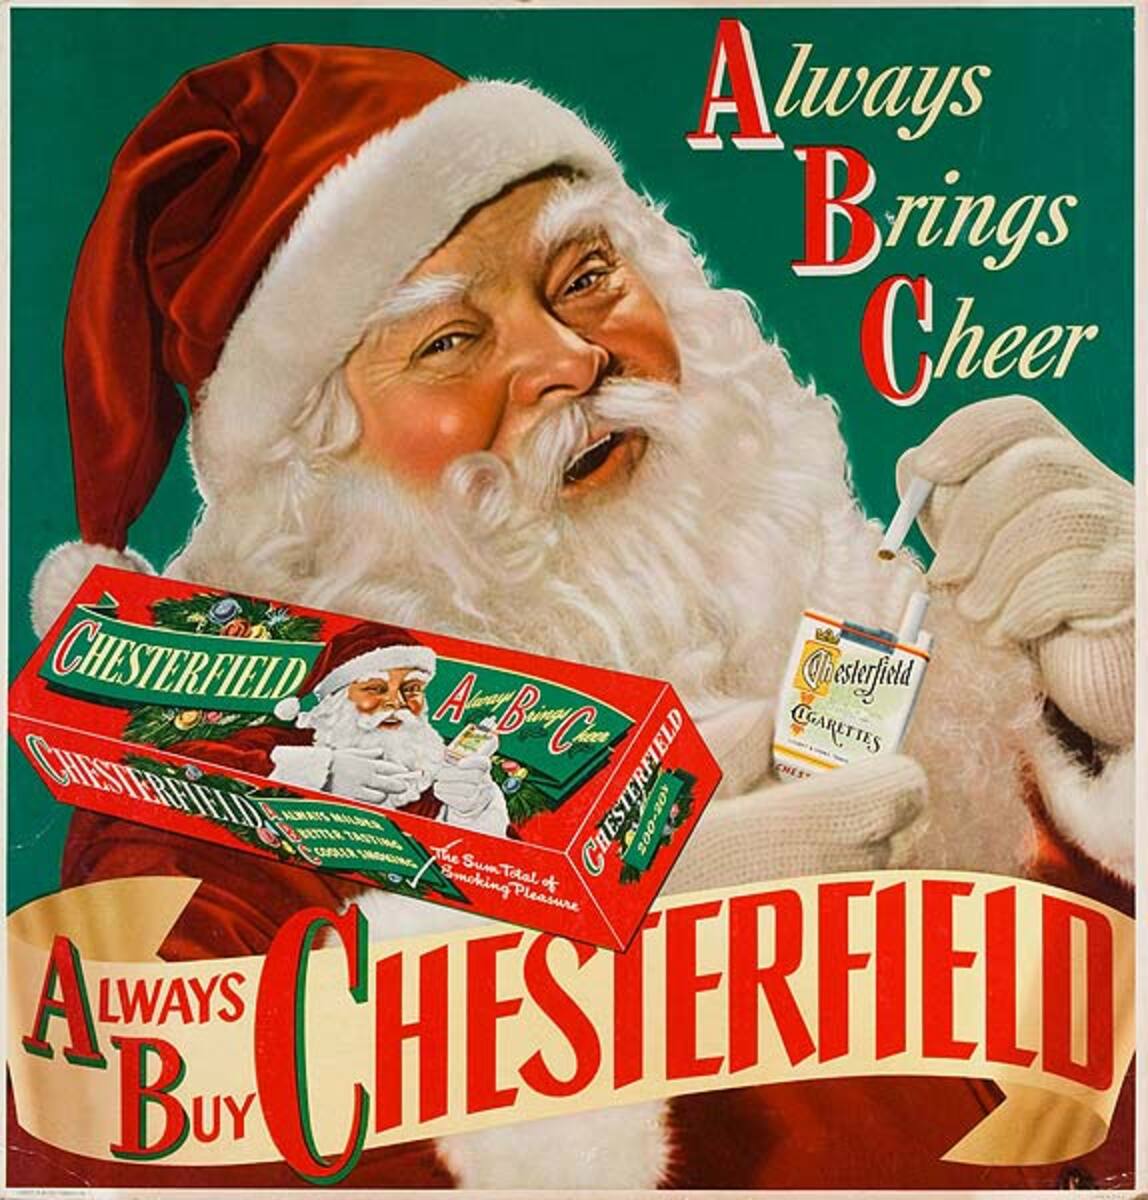 Chesterfield Always Brings Cheer Cigarettes Santa Original American Christmas Advertising Poster